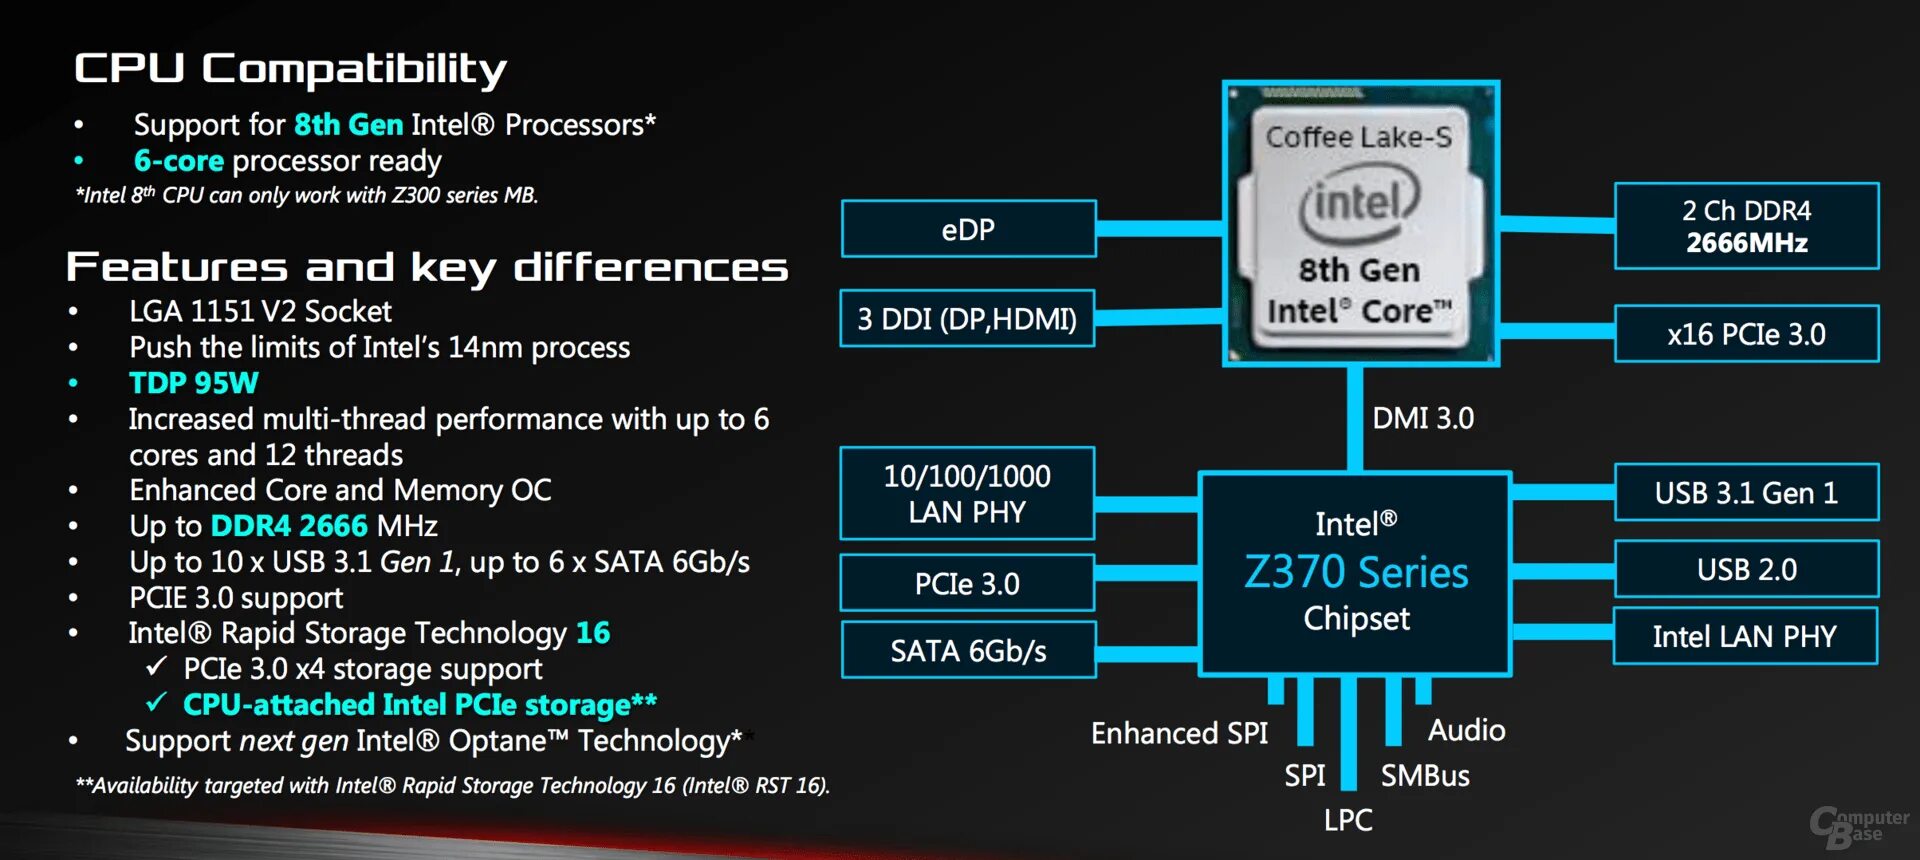 Intel Coffee Lake-s IMC. Архитектура Intel i7 8700. Intel DMI 4.0. Processor 8th Gen Intel. Intel 6 series chipset